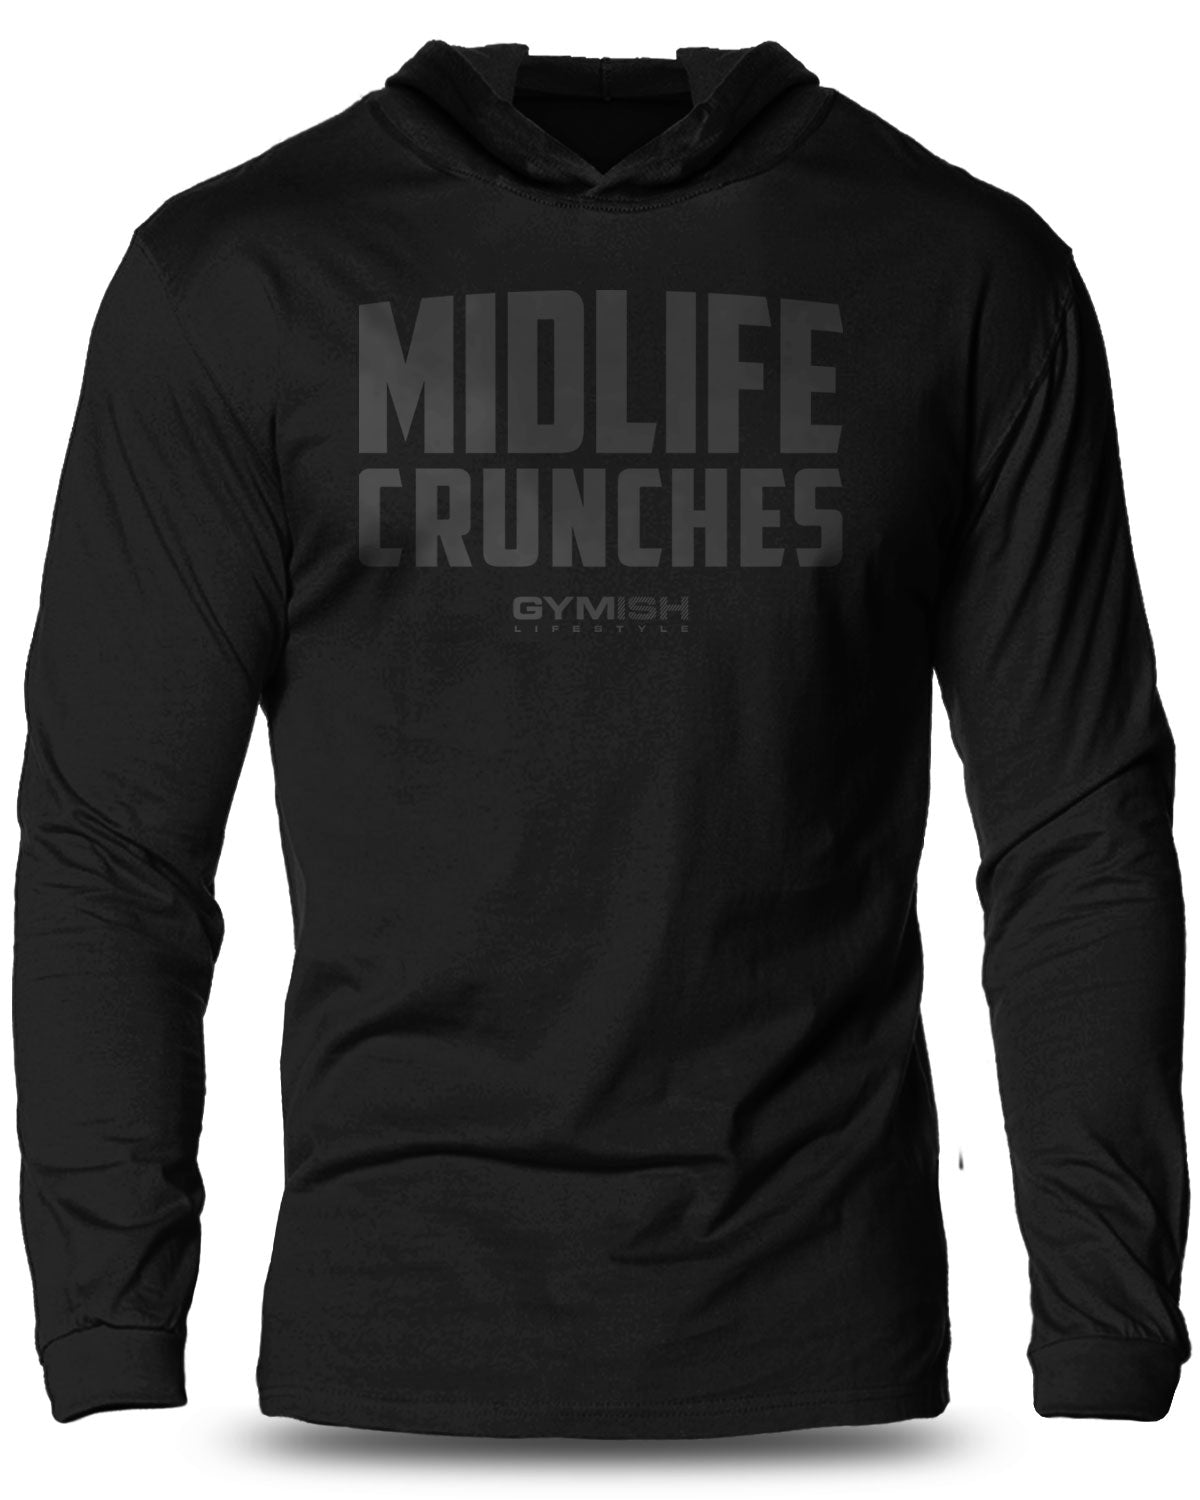 082- Midlife Crunches Lightweight Long Sleeve Hooded T-shirt for Men